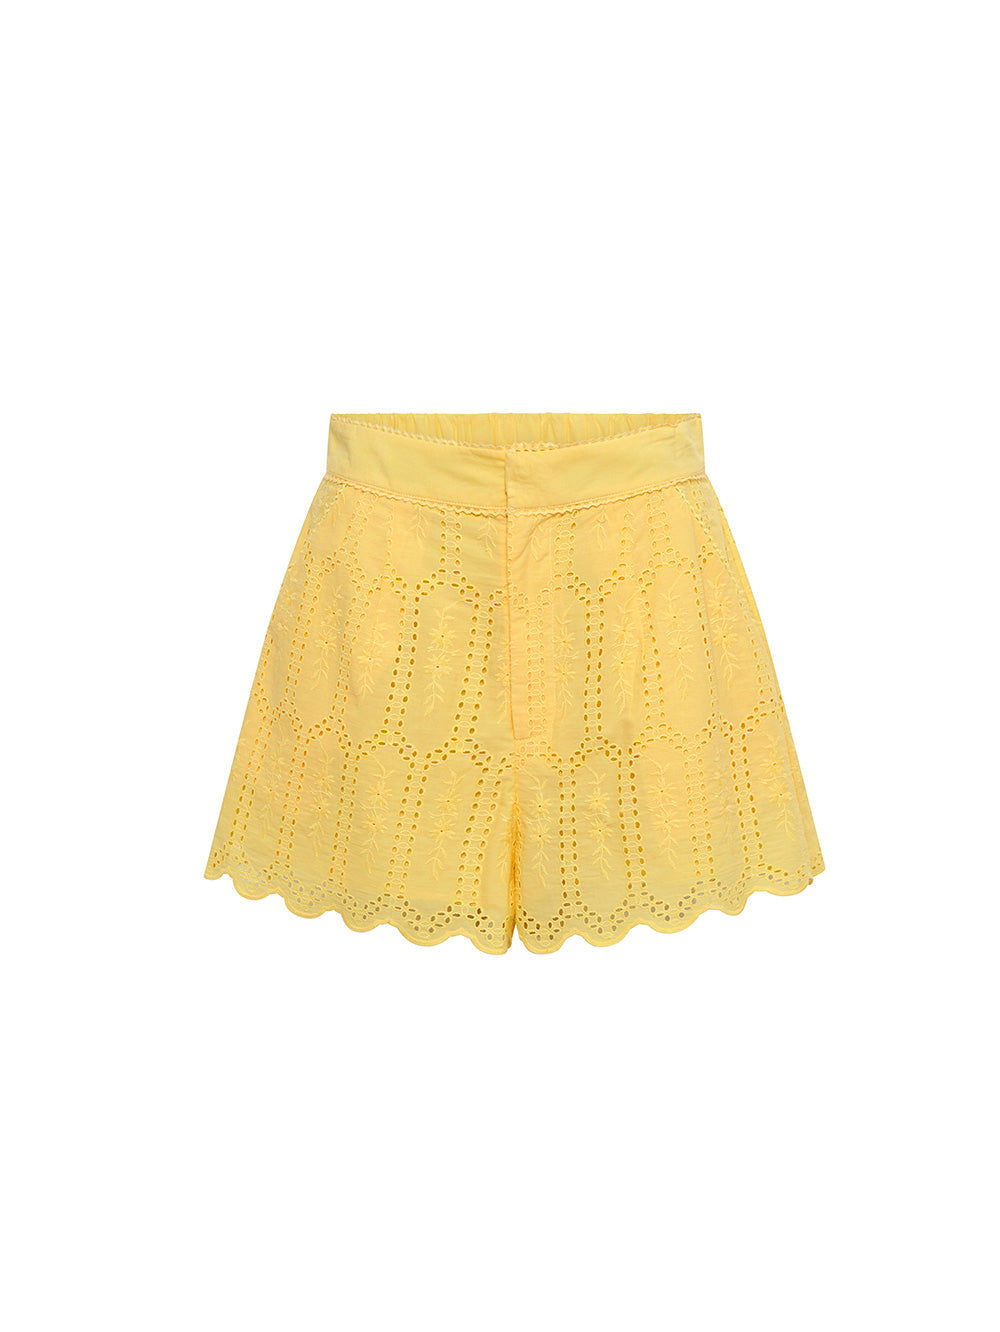 Estelle Short KIVARI | Yellow shorts